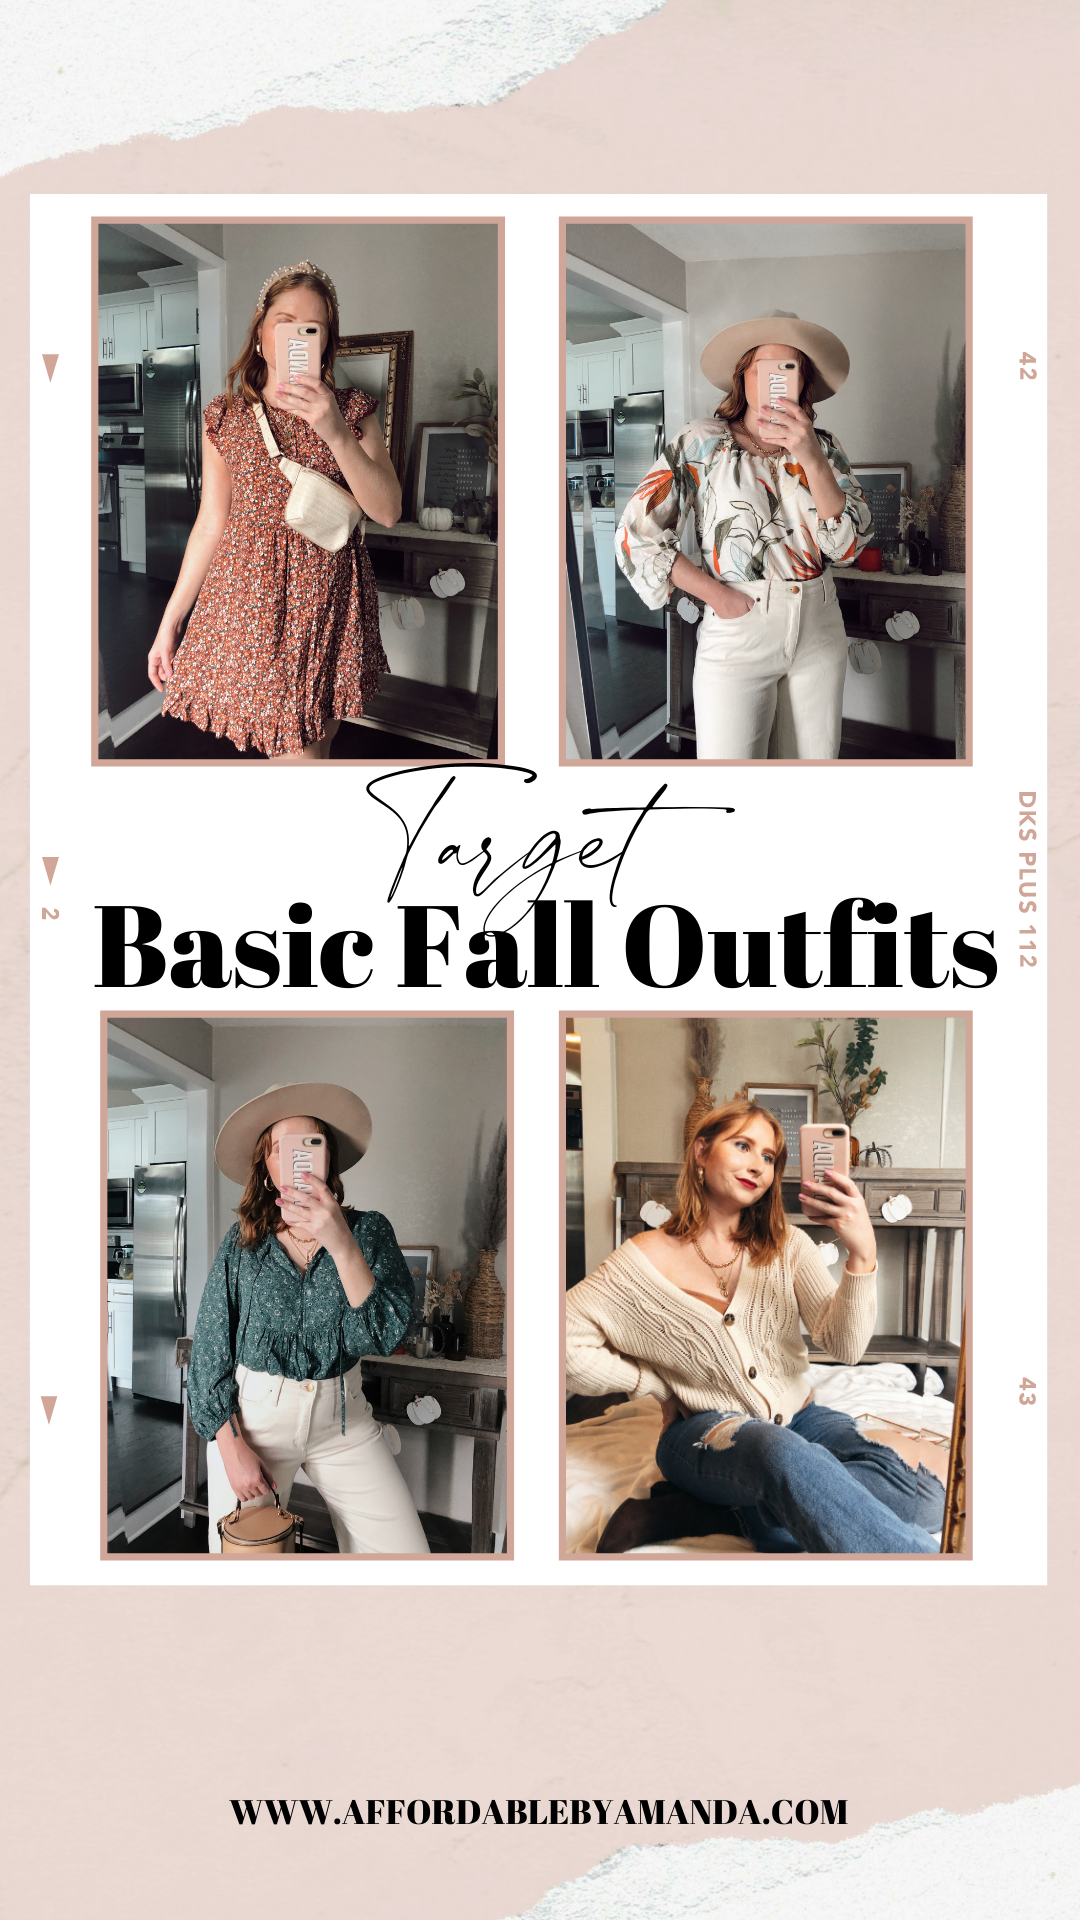 Fall Clothing Inspiration, US fashion